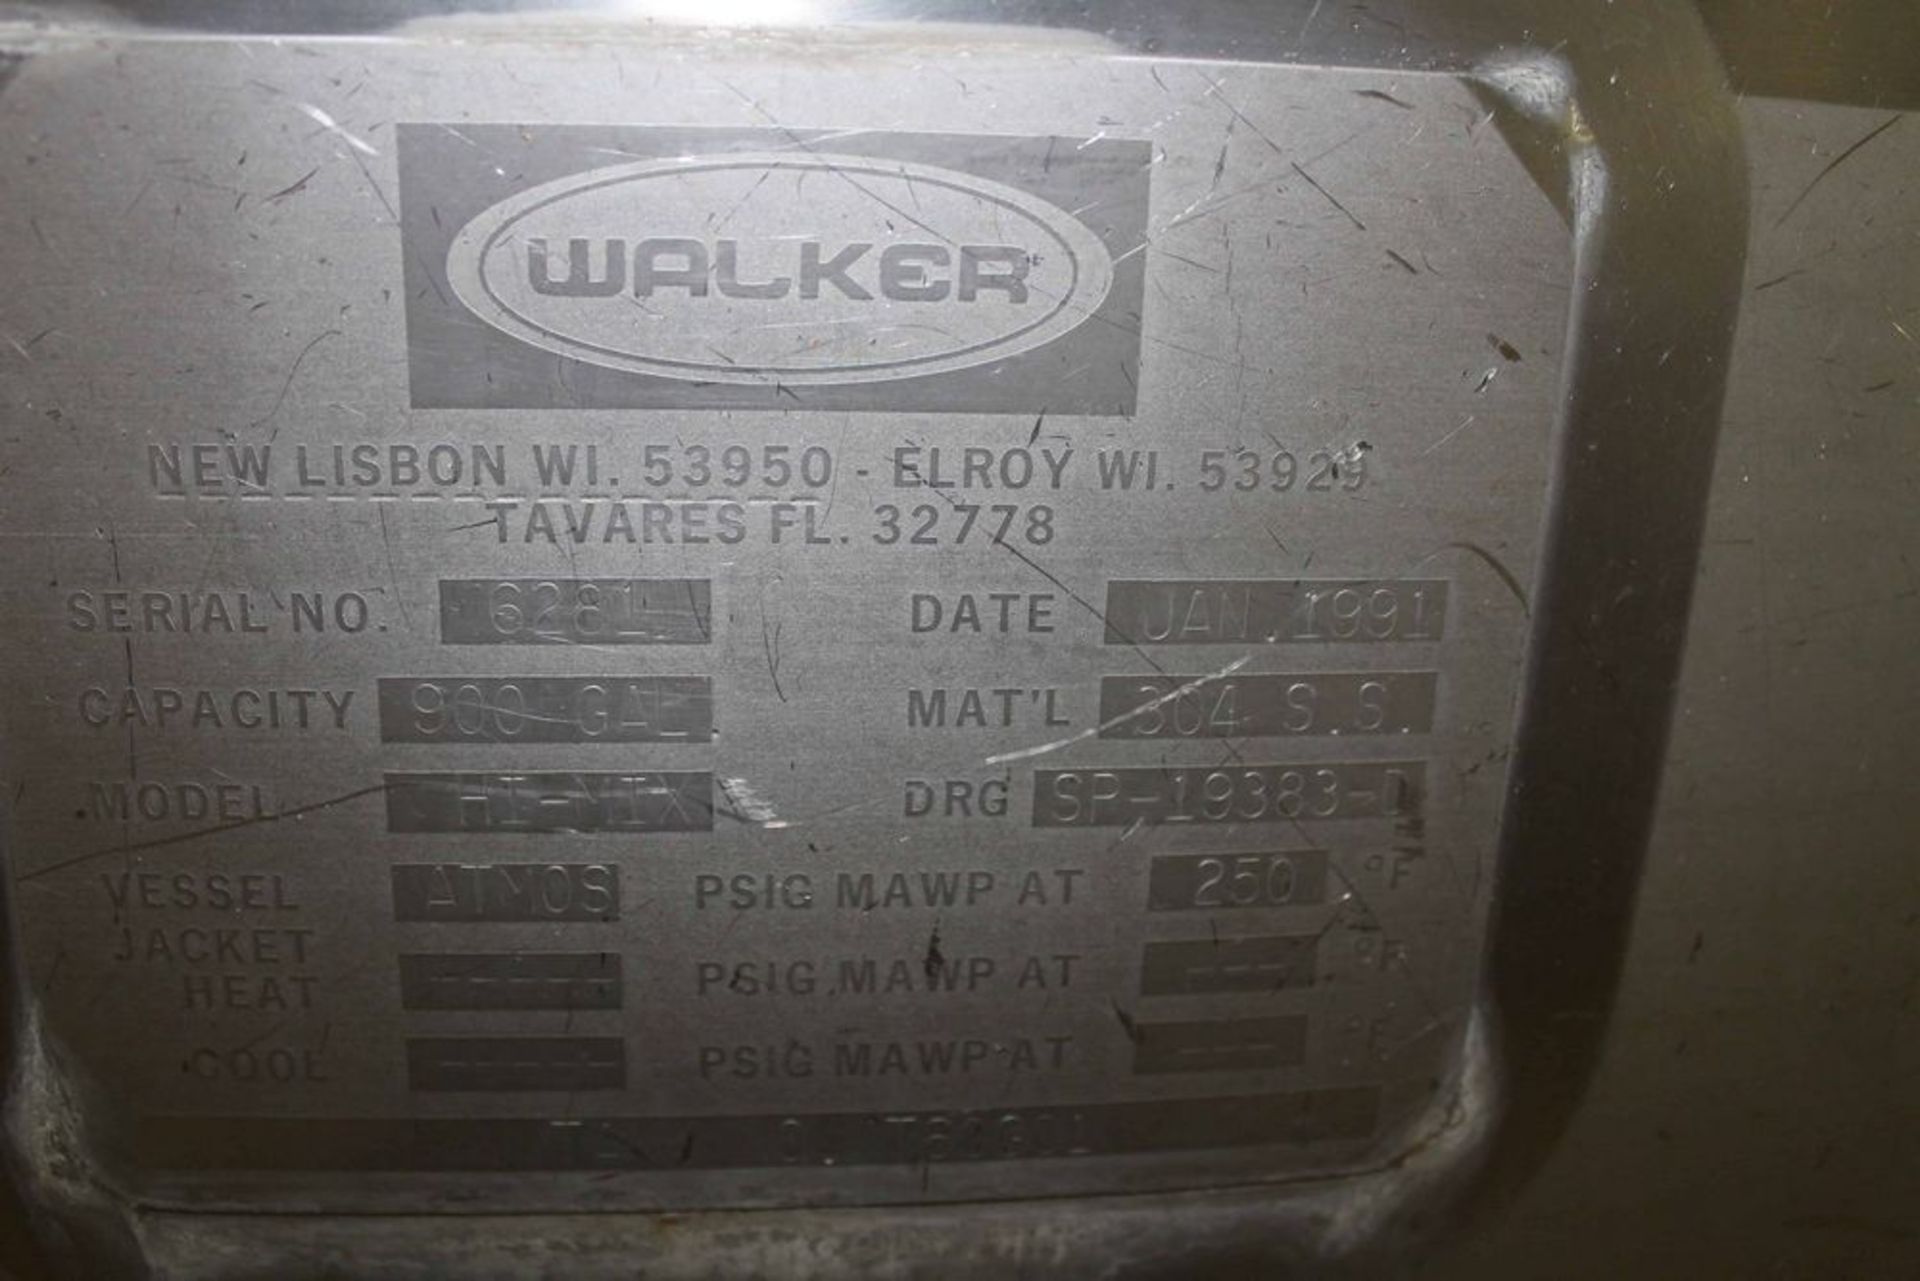 Walker 900 Gallon Single Wall Stainless Steel Tank - Image 4 of 4